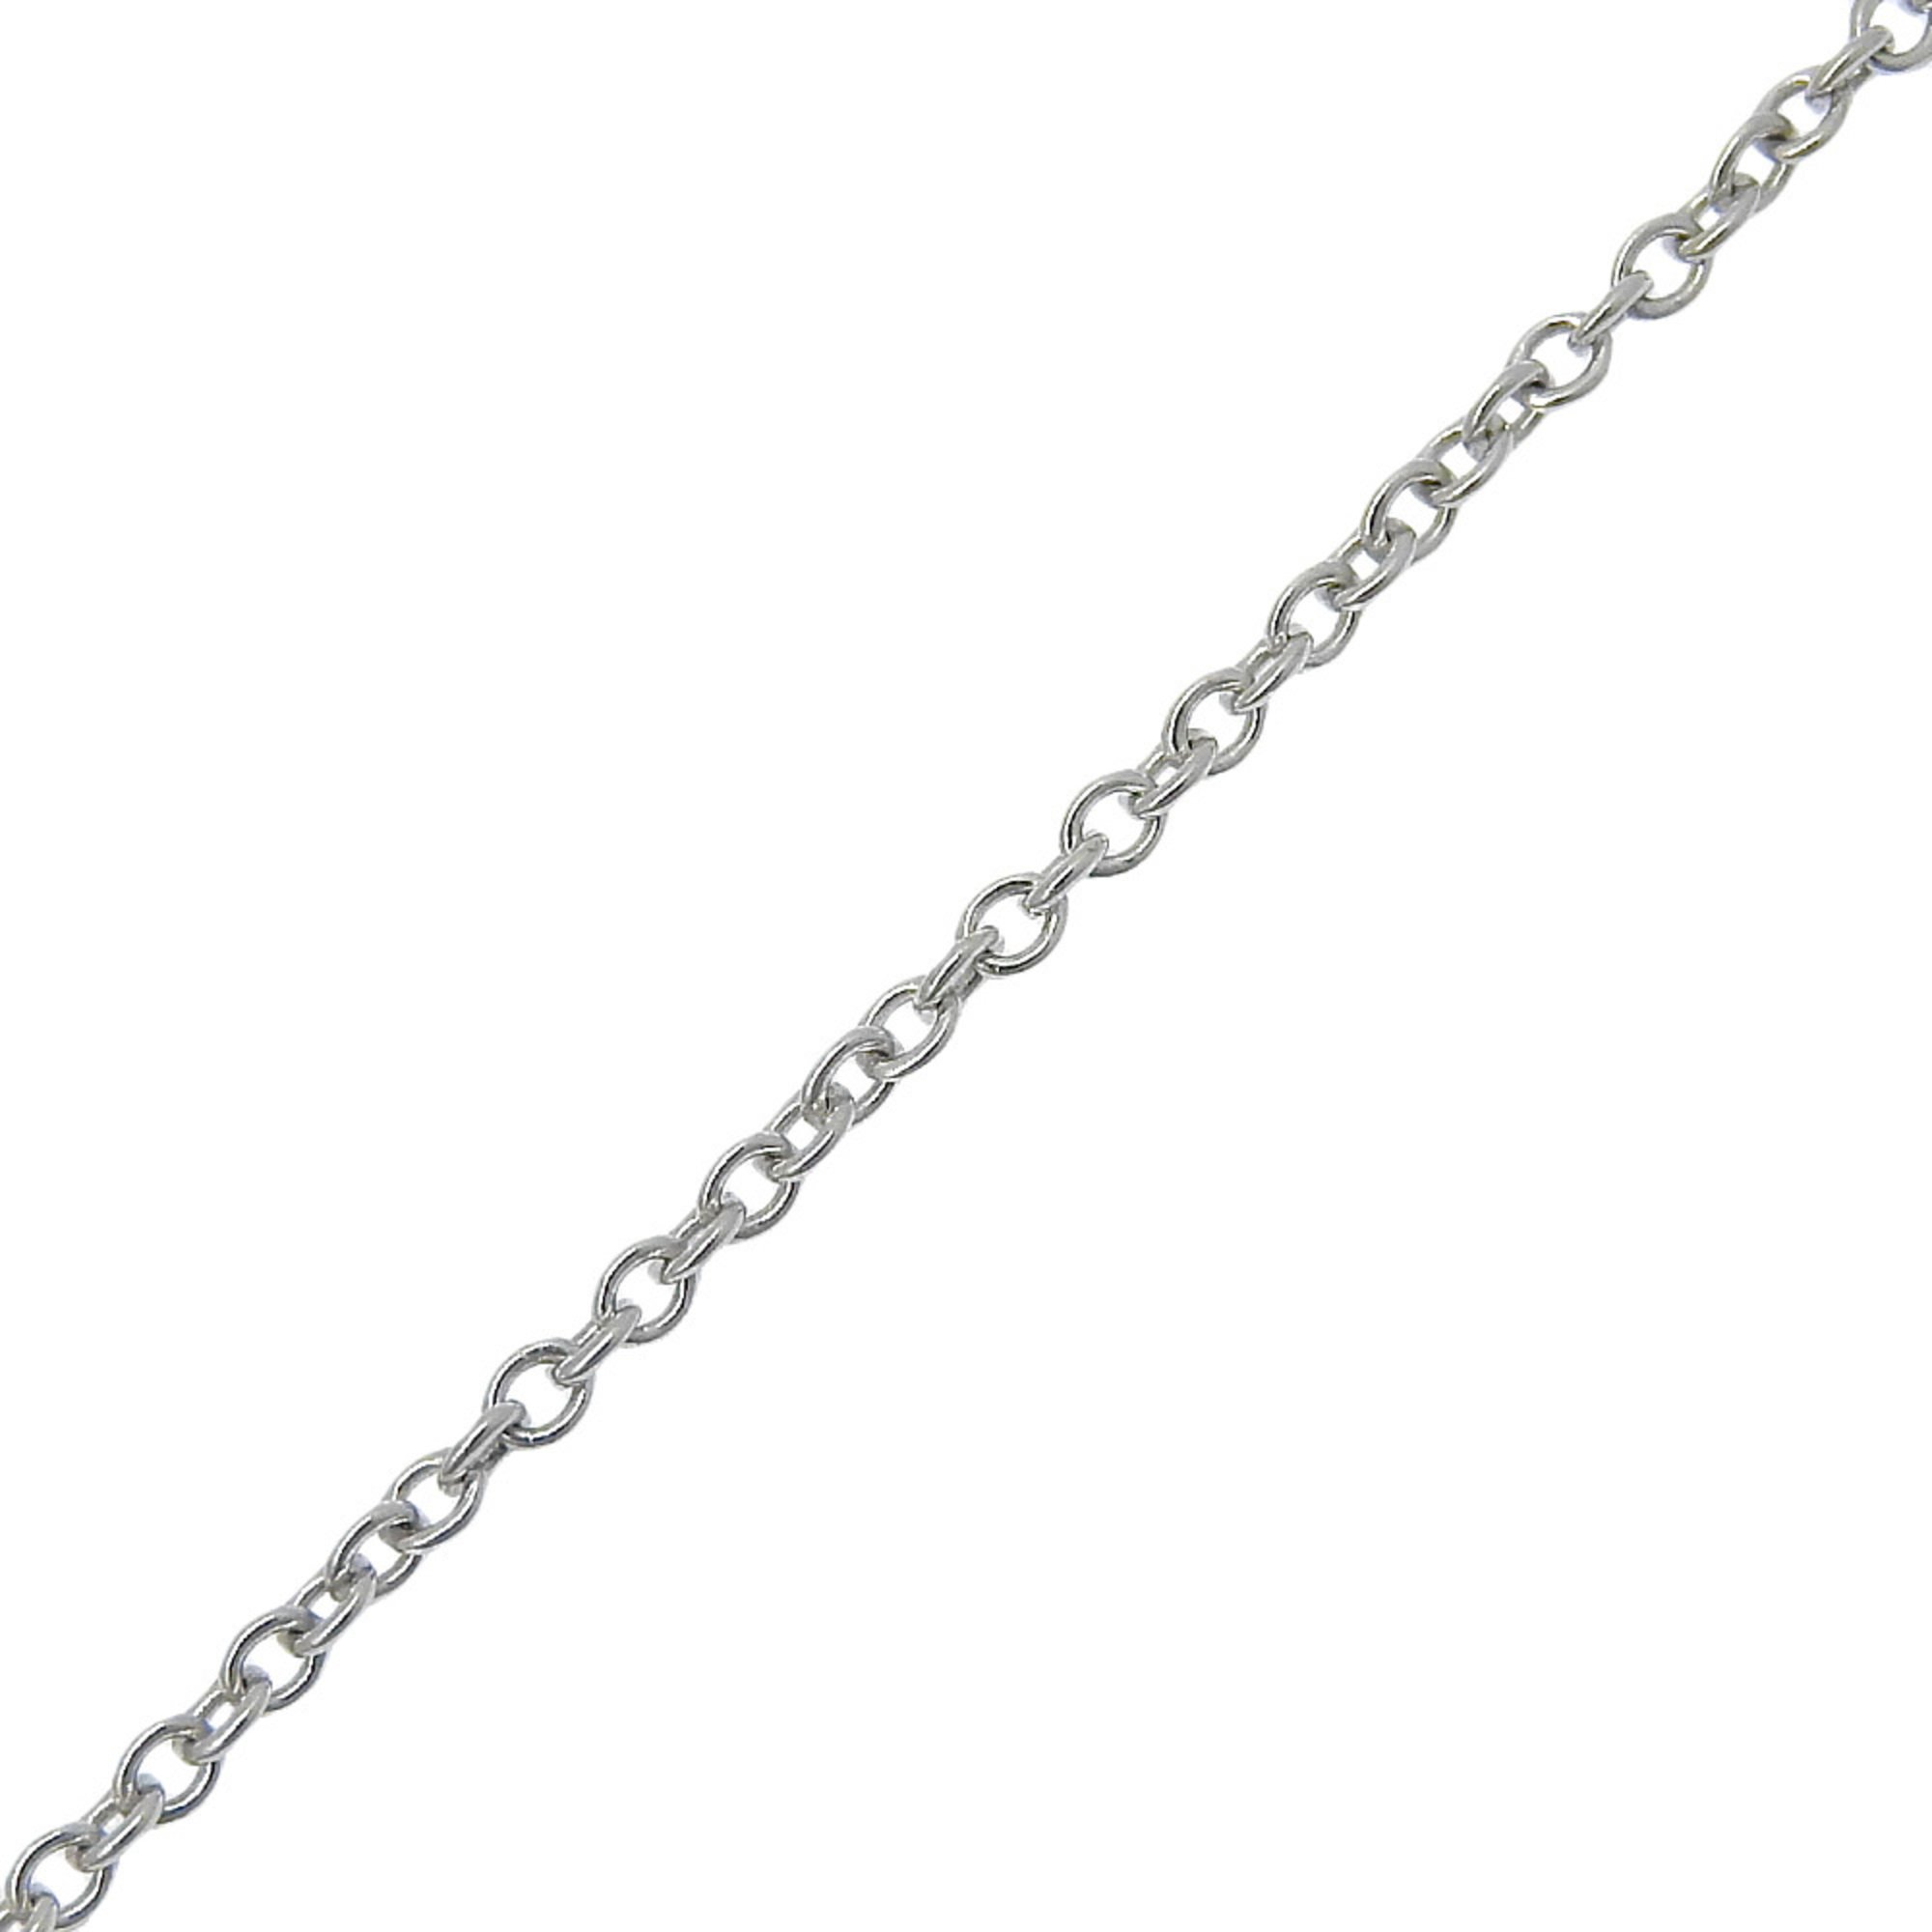 Tiffany & Co. T Smile Small Bracelet, K18 White Gold x Diamond, Approx. 2.4g, Small, Women's S